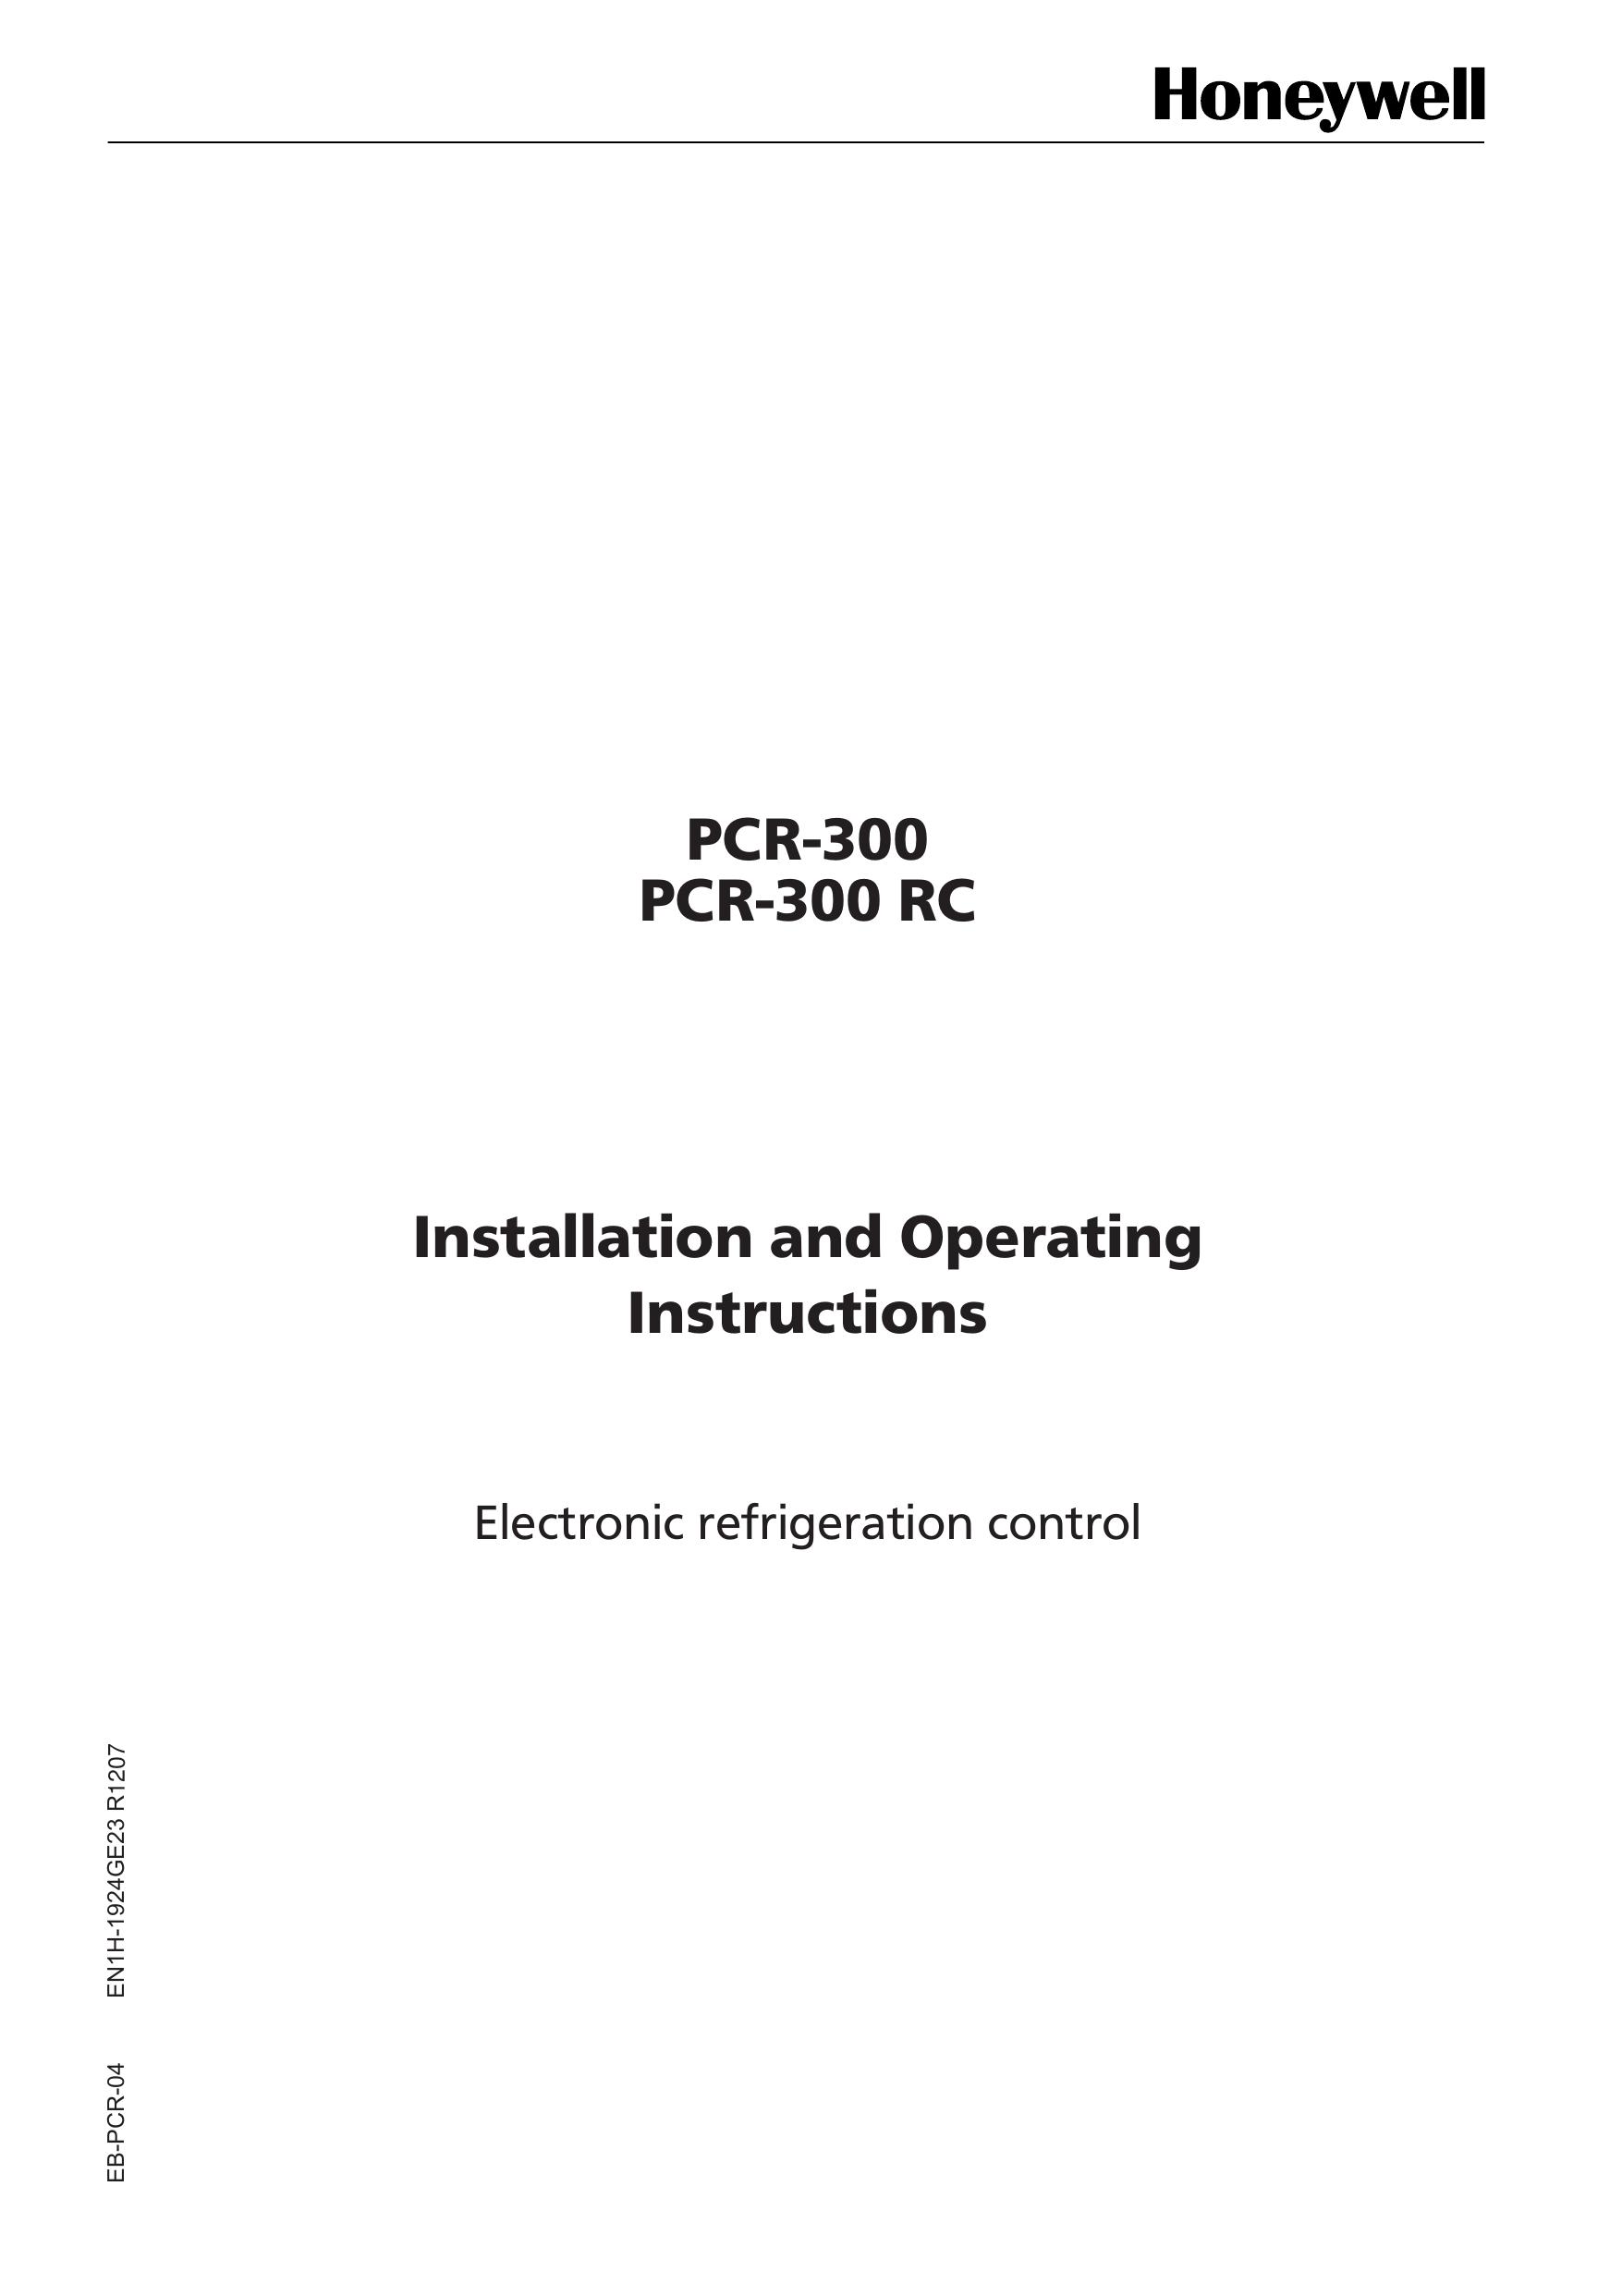 Honeywell PCR-300 RC Refrigerator User Manual